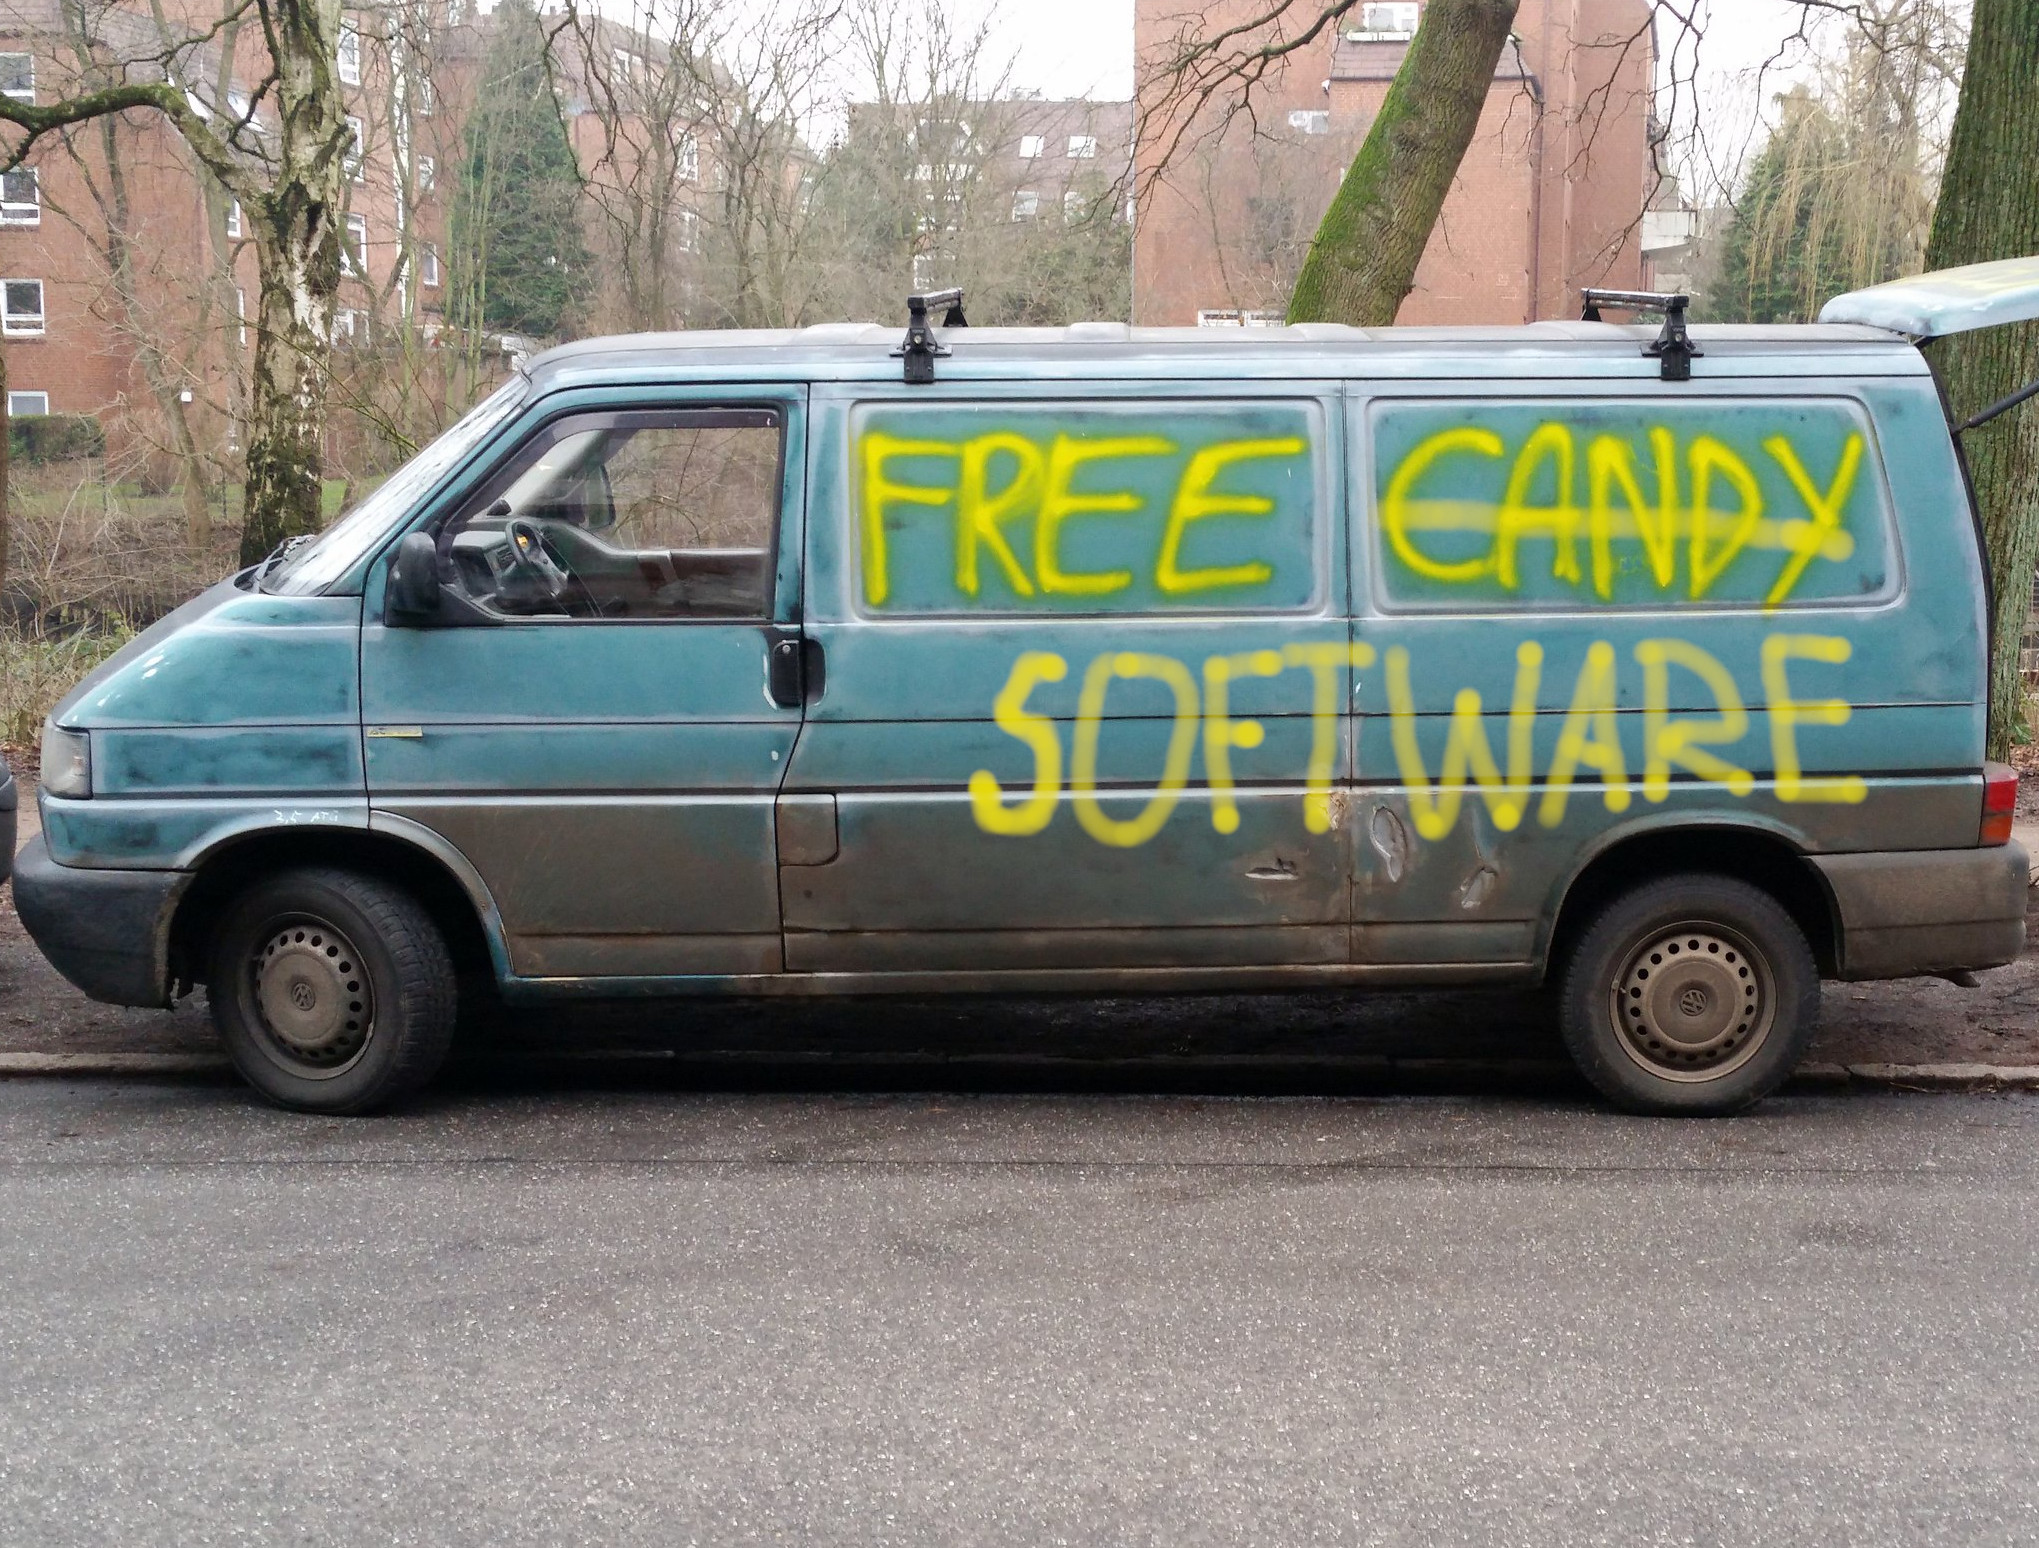 free candy van legit